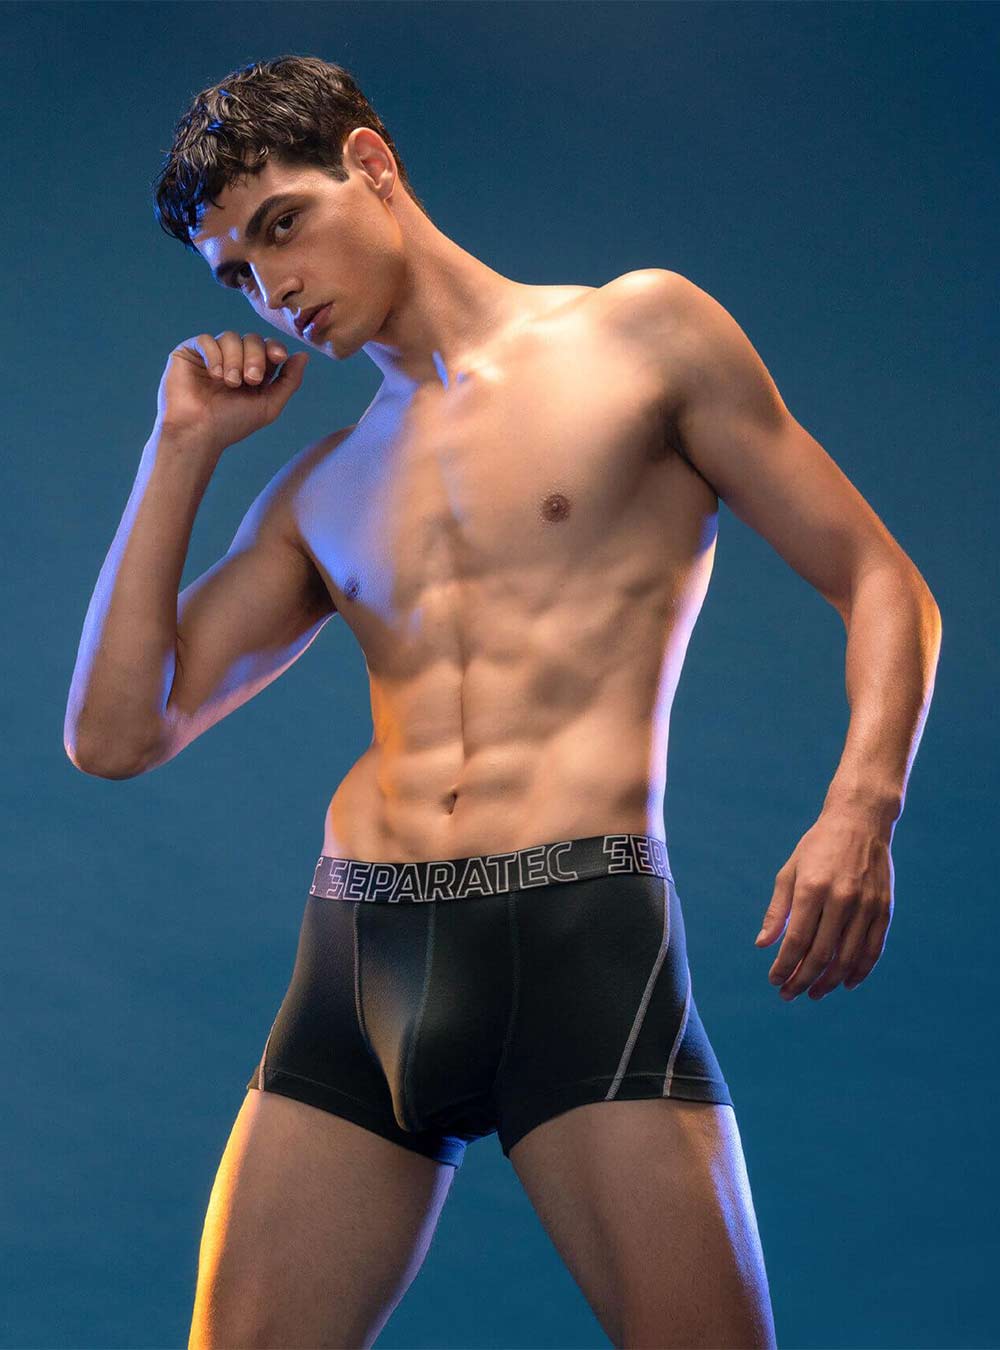 Modeling Men's Briefs Underwear!! w/ Separatec Dual Pouch Technology 